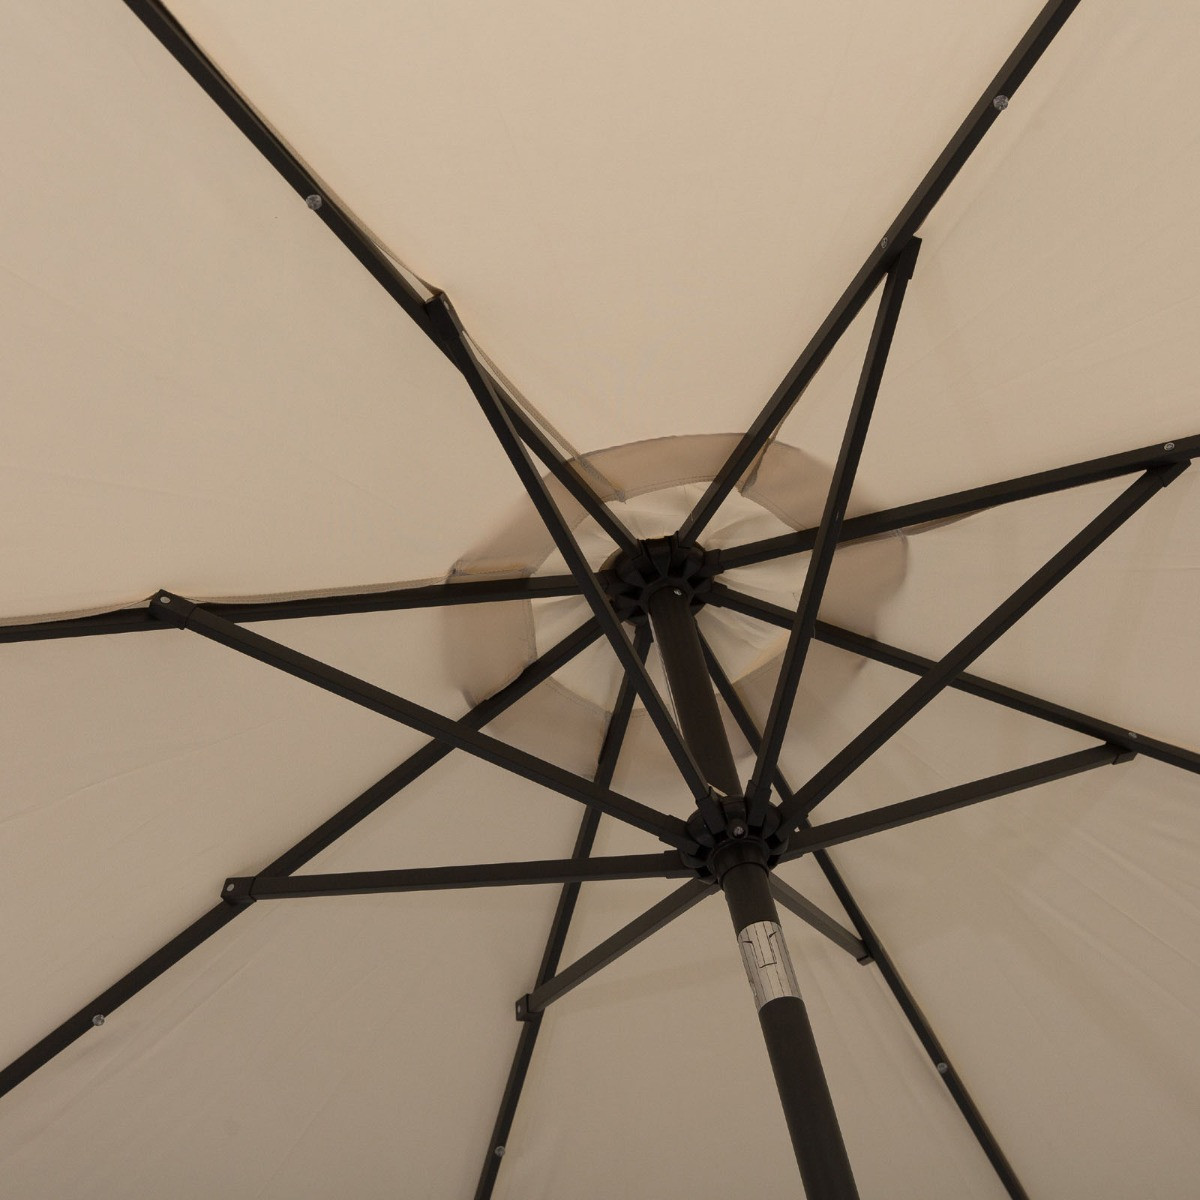 Outsunny 24 LED Solar Powered Parasol Umbrella, Cream - 2.7m>